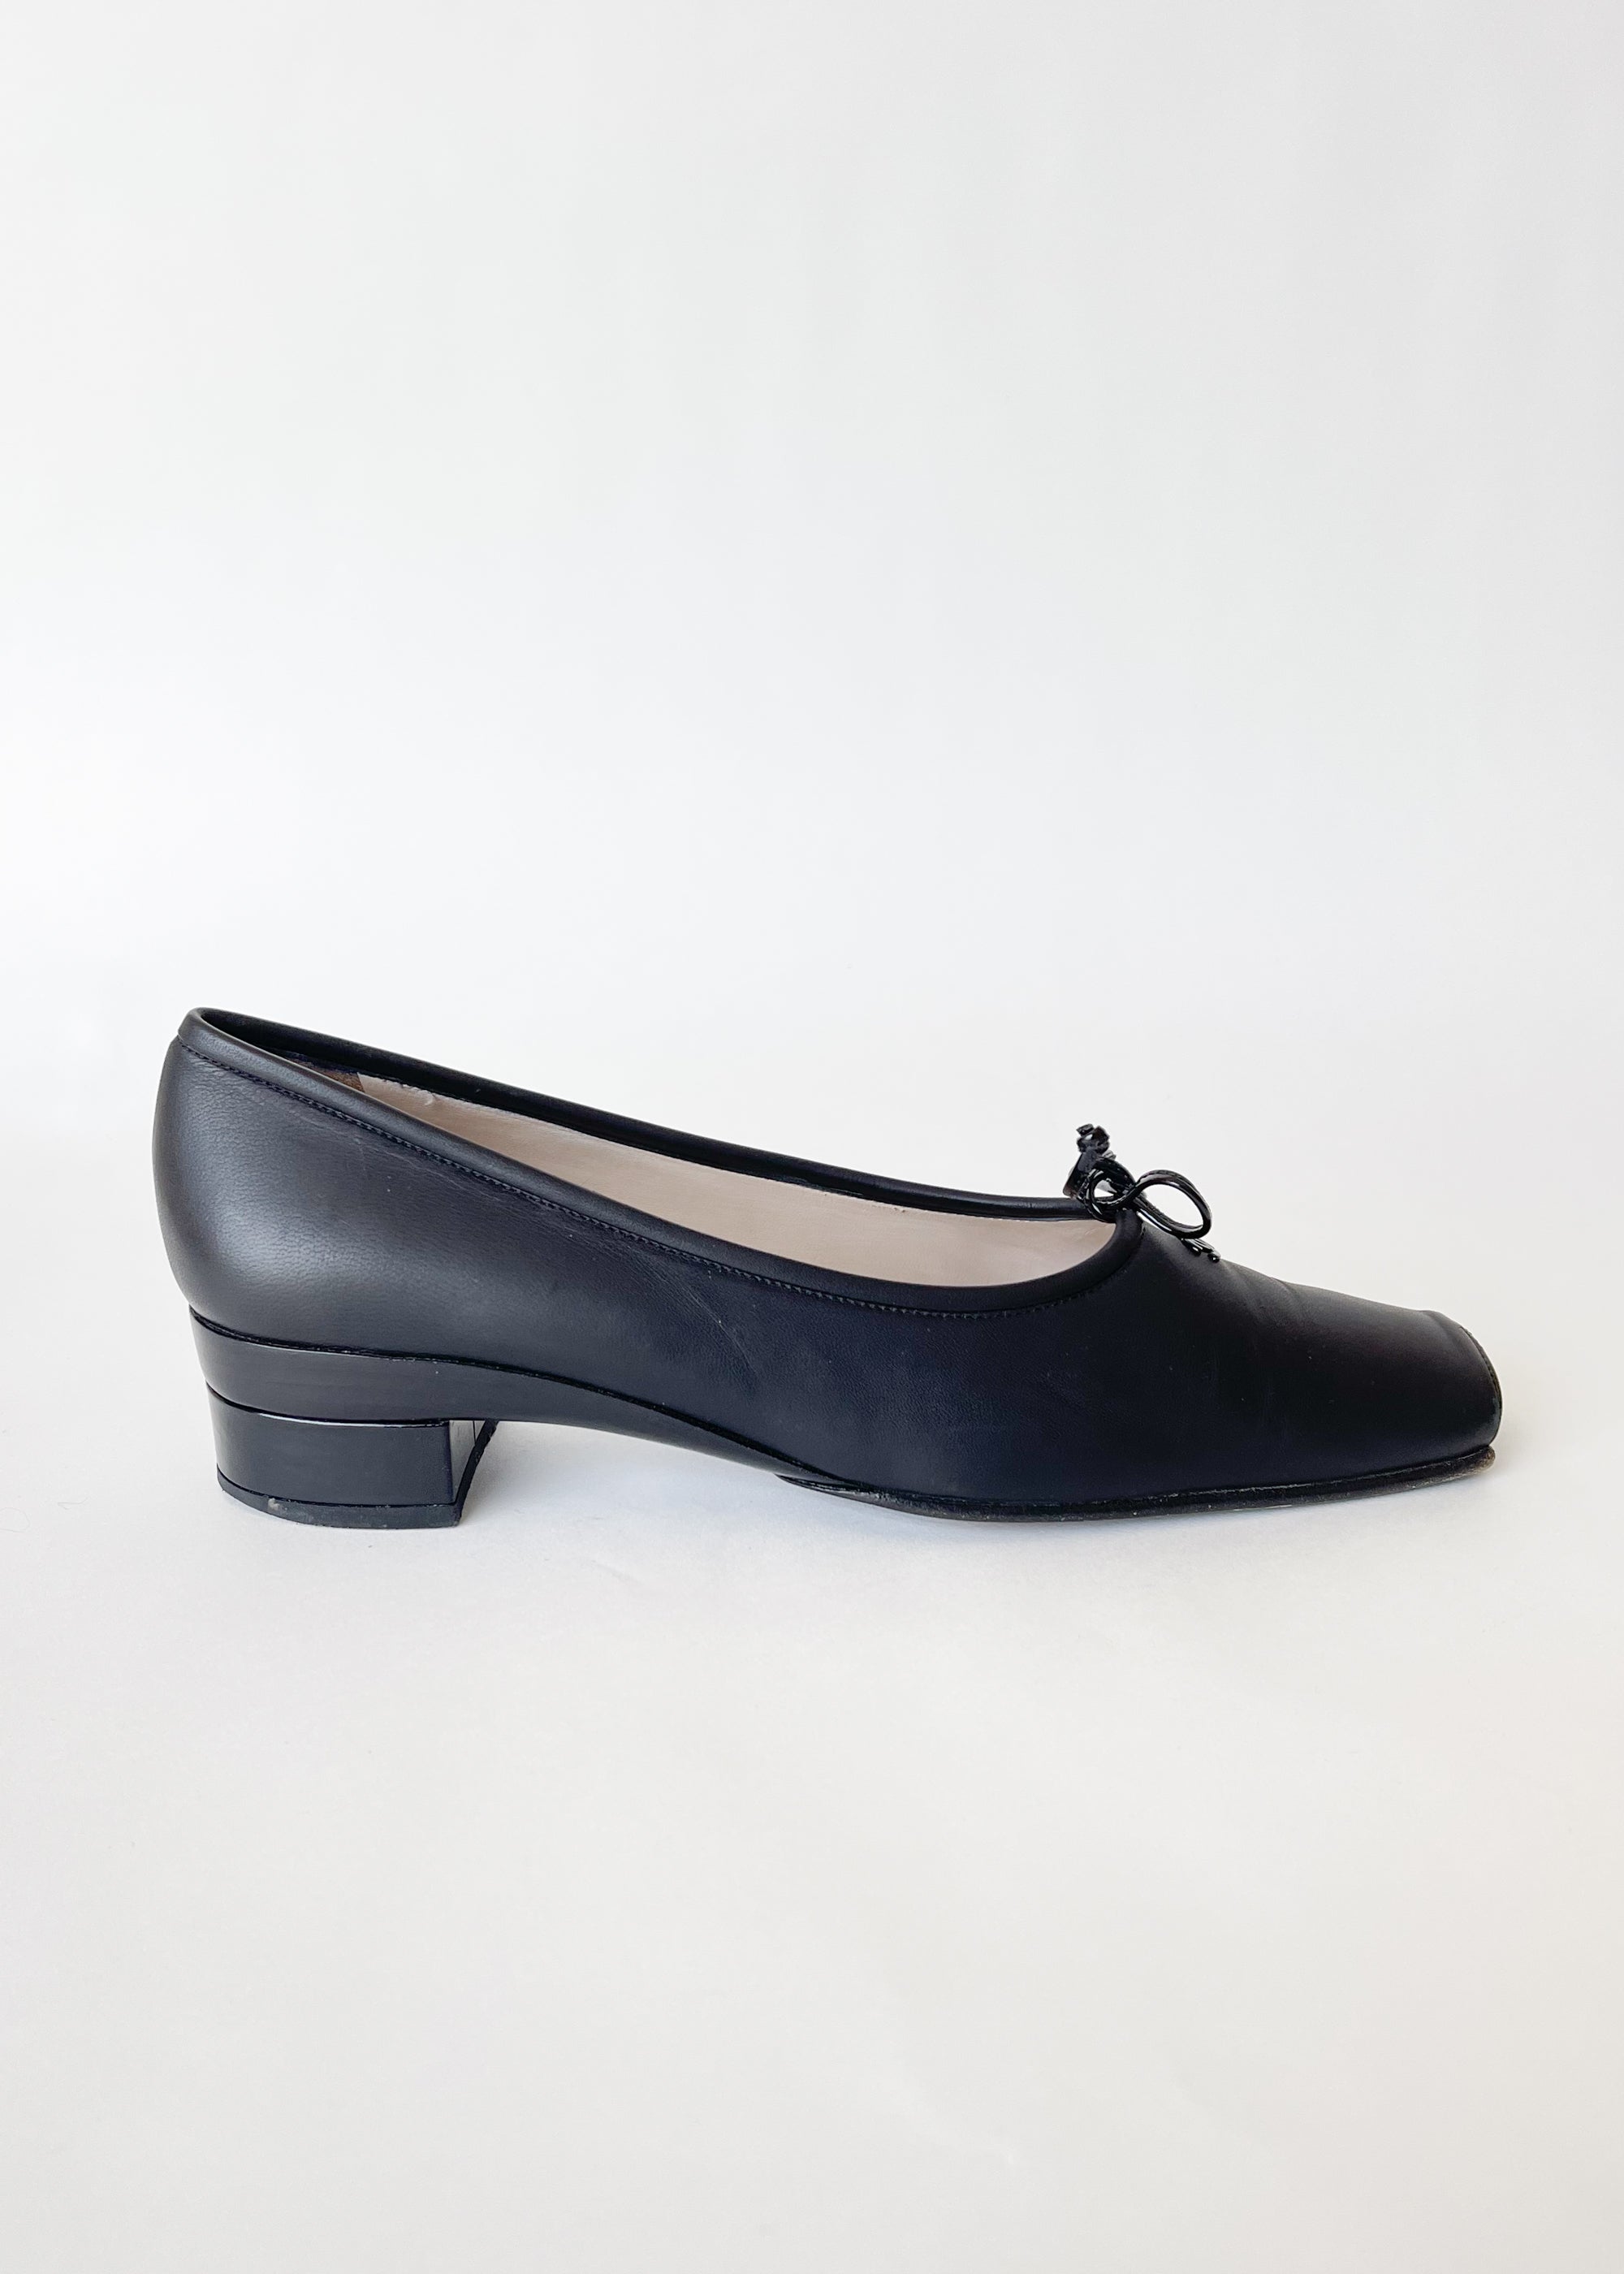 vintage Chanel Shoes for Women - Vestiaire Collective